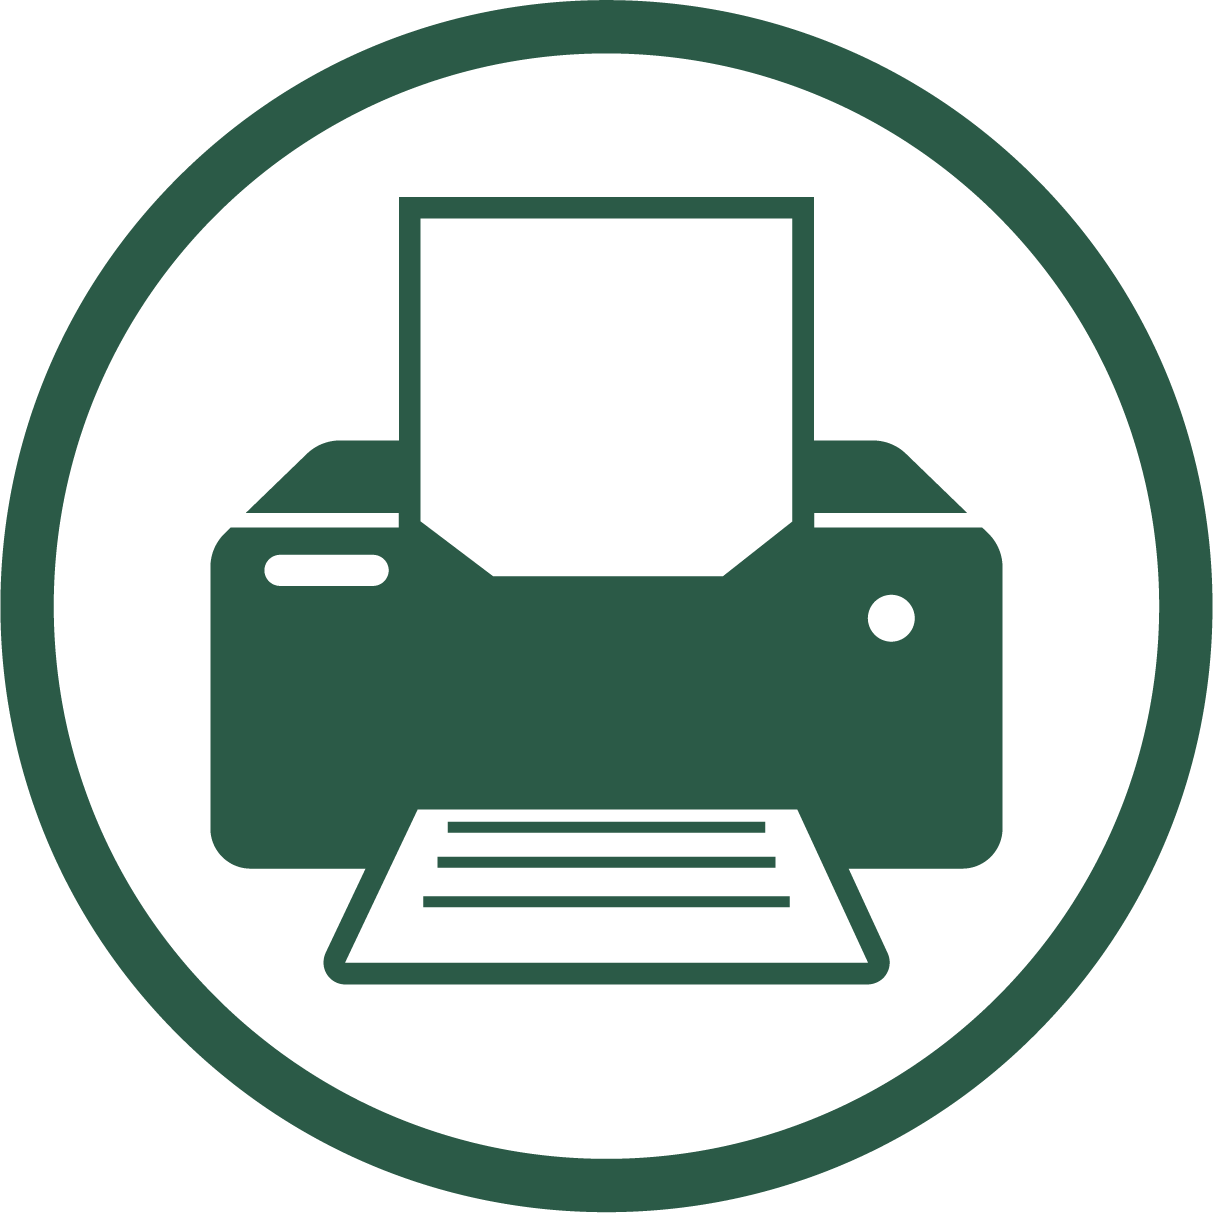 Printing Icon